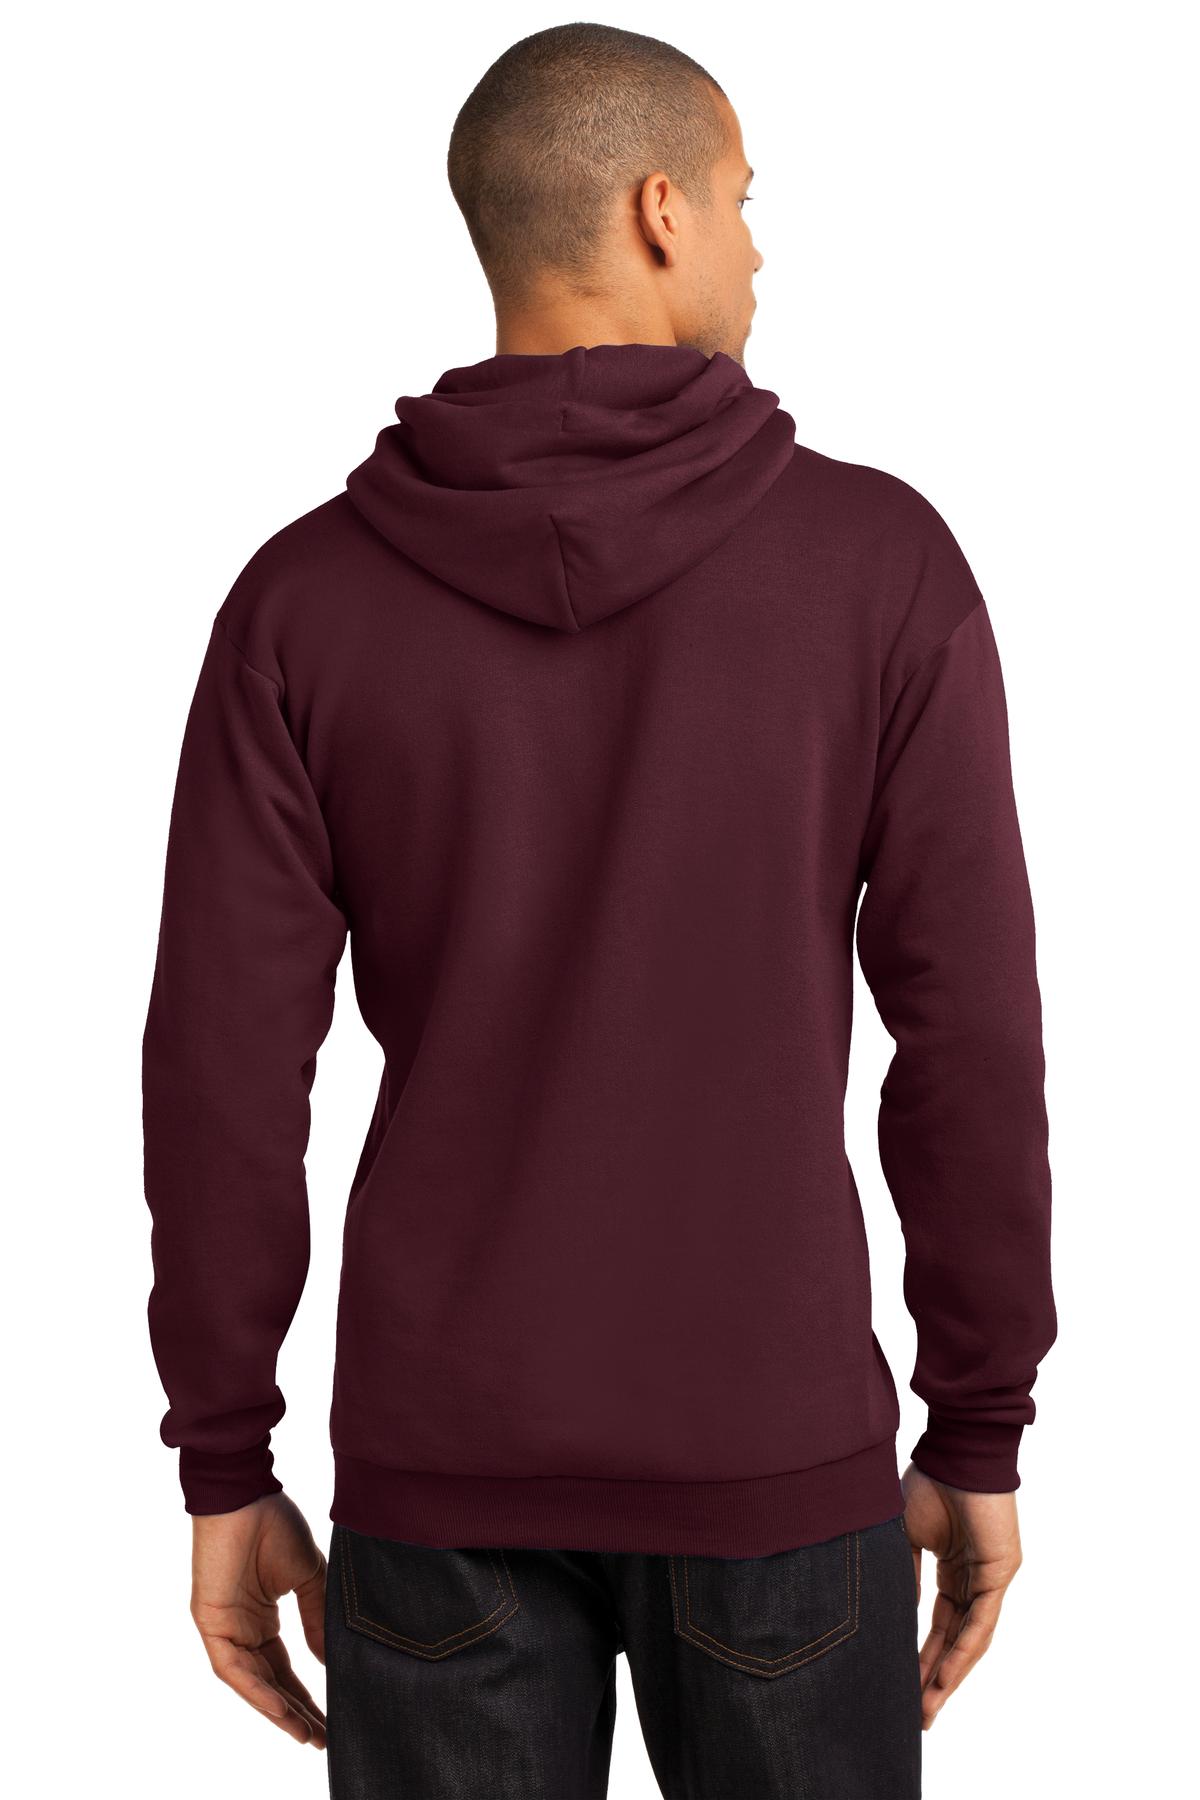 Port & Company® - Core Fleece Pullover Hooded Sweatshirt. PC78H [Maroon] - DFW Impression